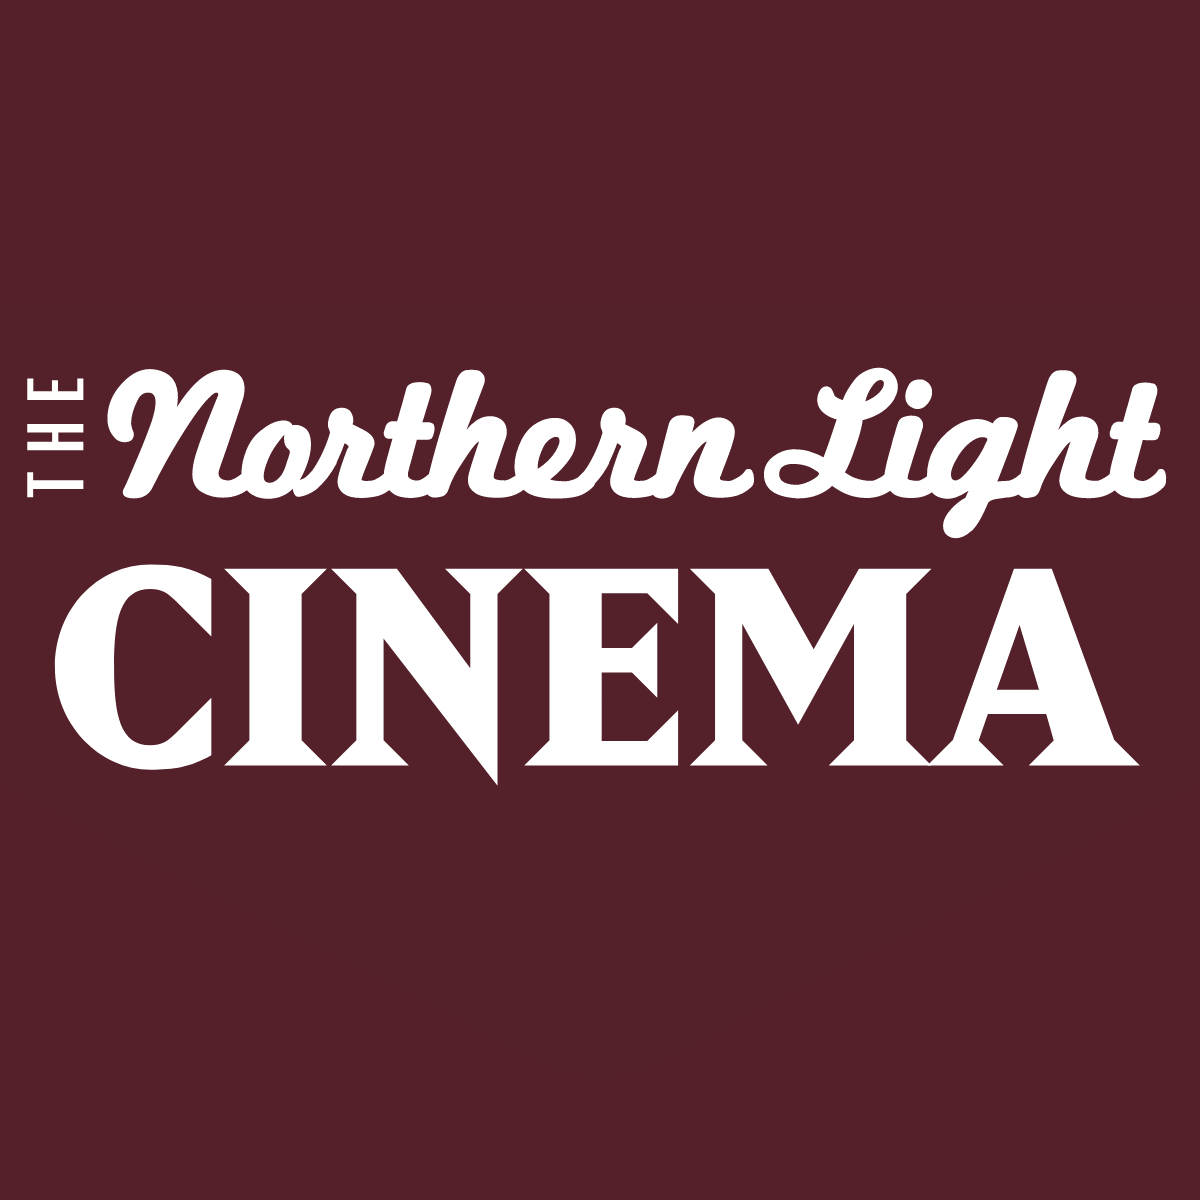 The Northern Light Cinema